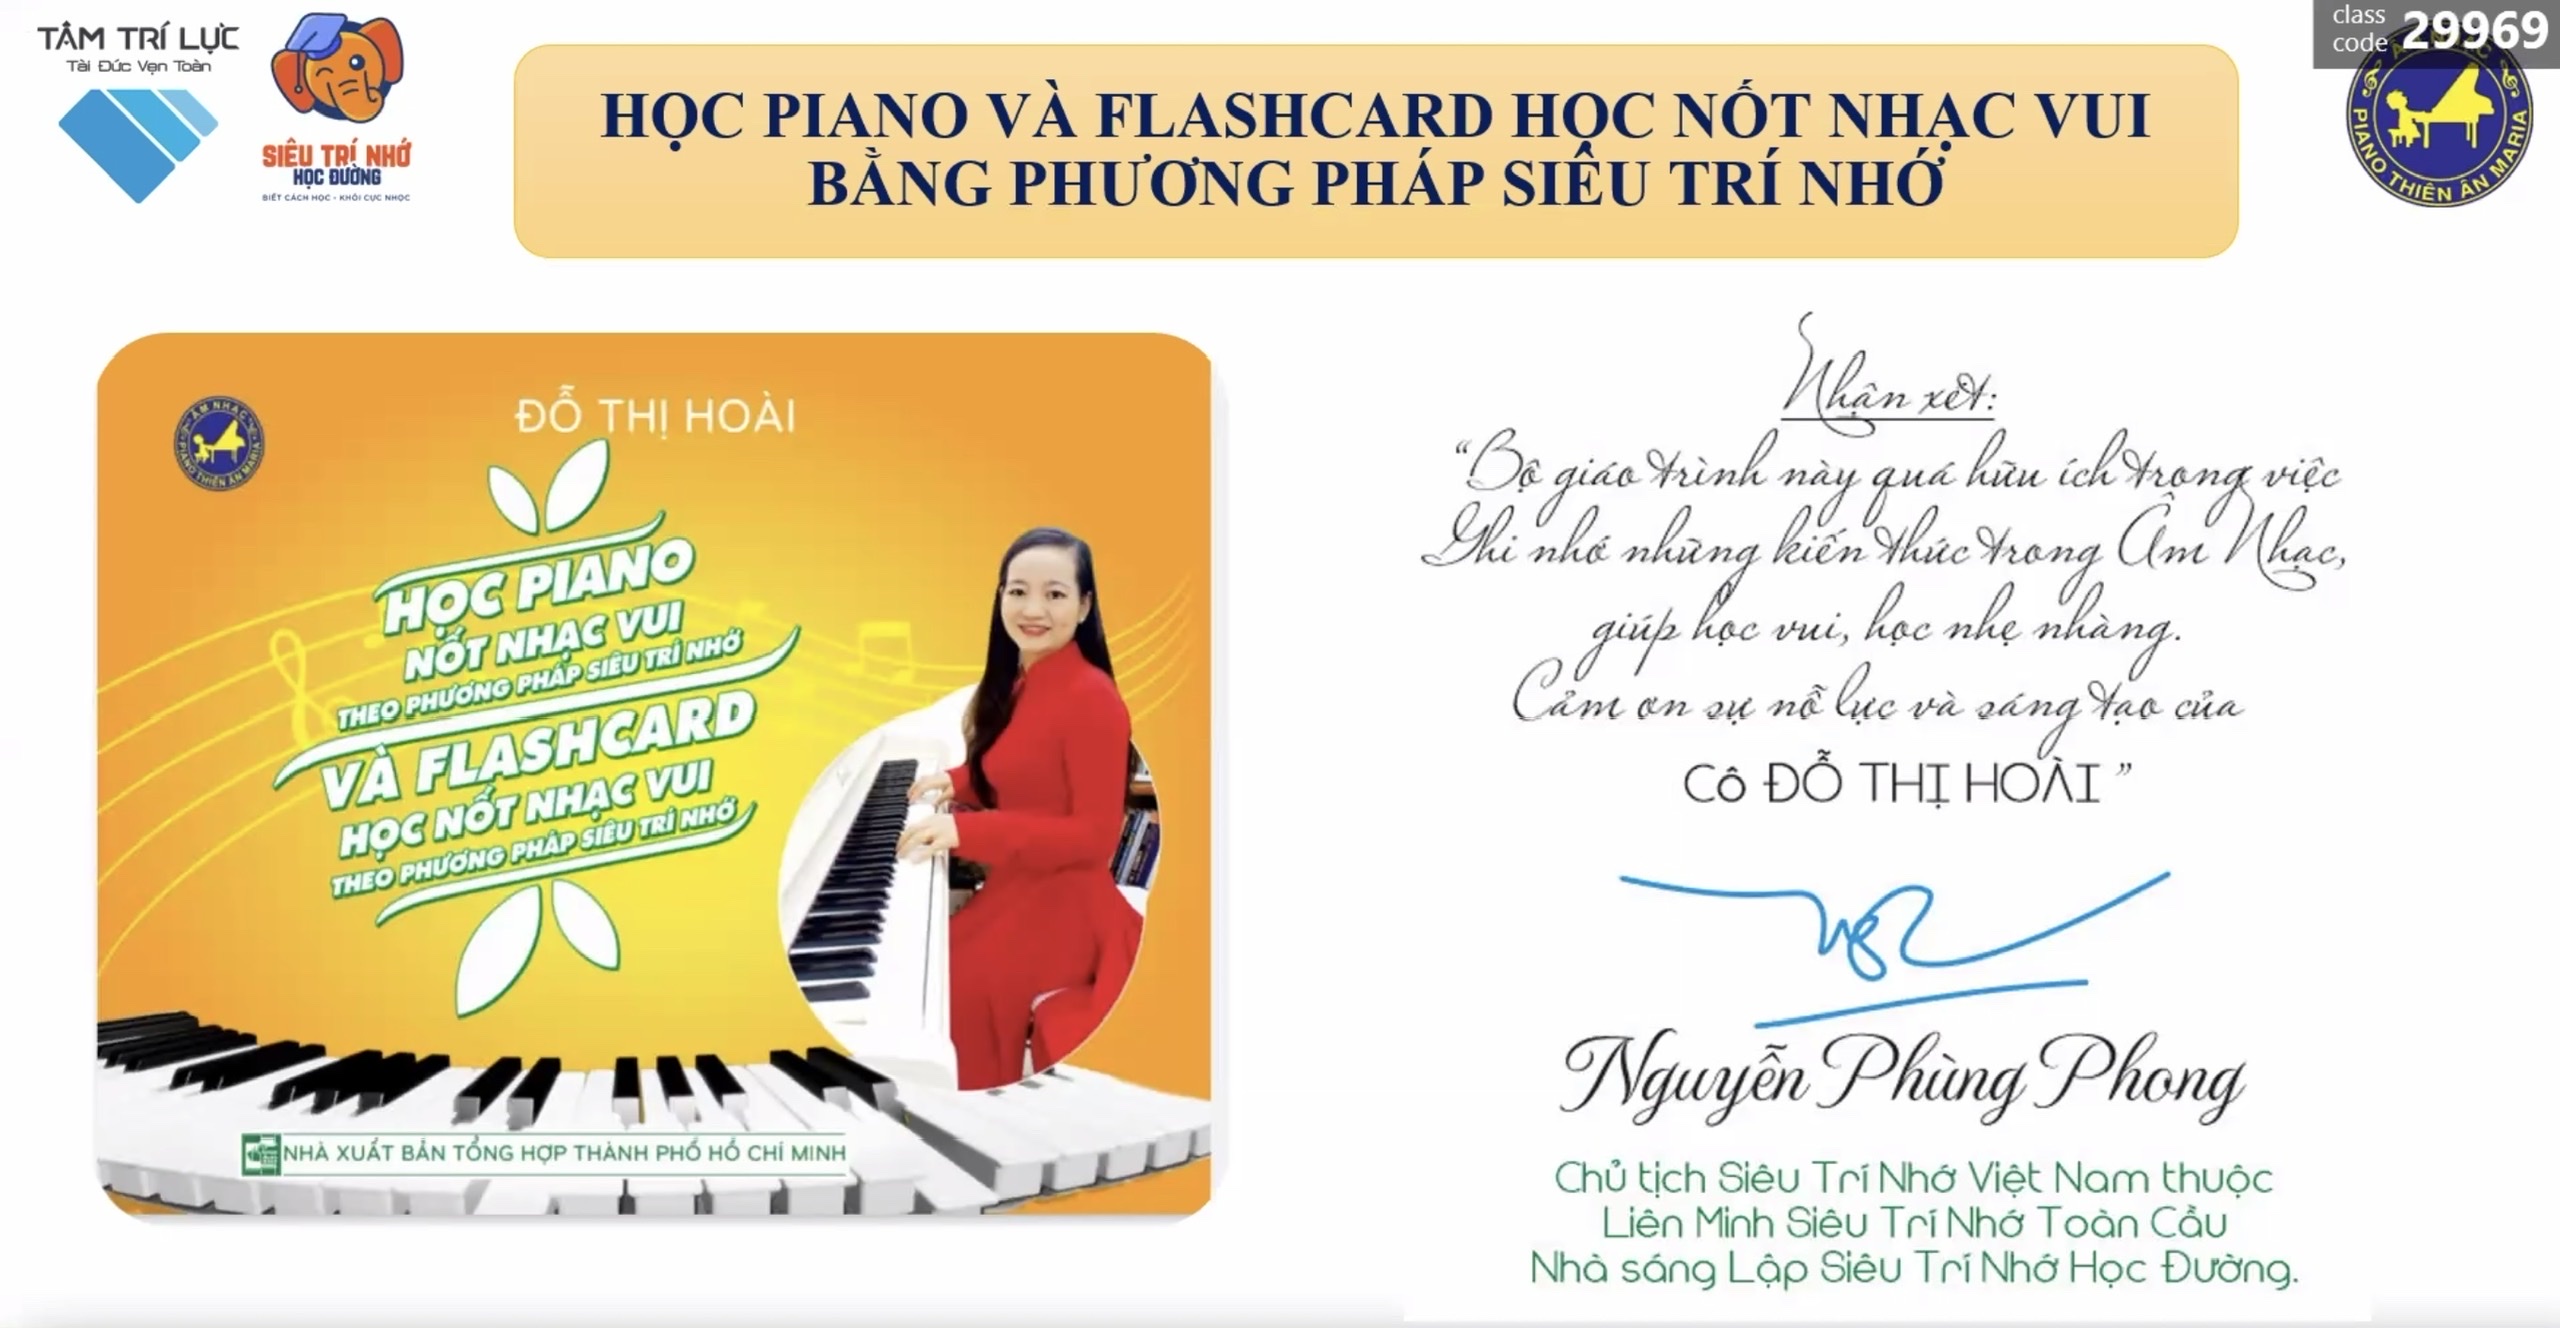 https://photo.salekit.com/uploads/salekit_1df930671f759fad5f1a4e6374ba4647/flashcard-hoc-piano-theo-phuong-phap-sieu-tri-nho-3.jpg